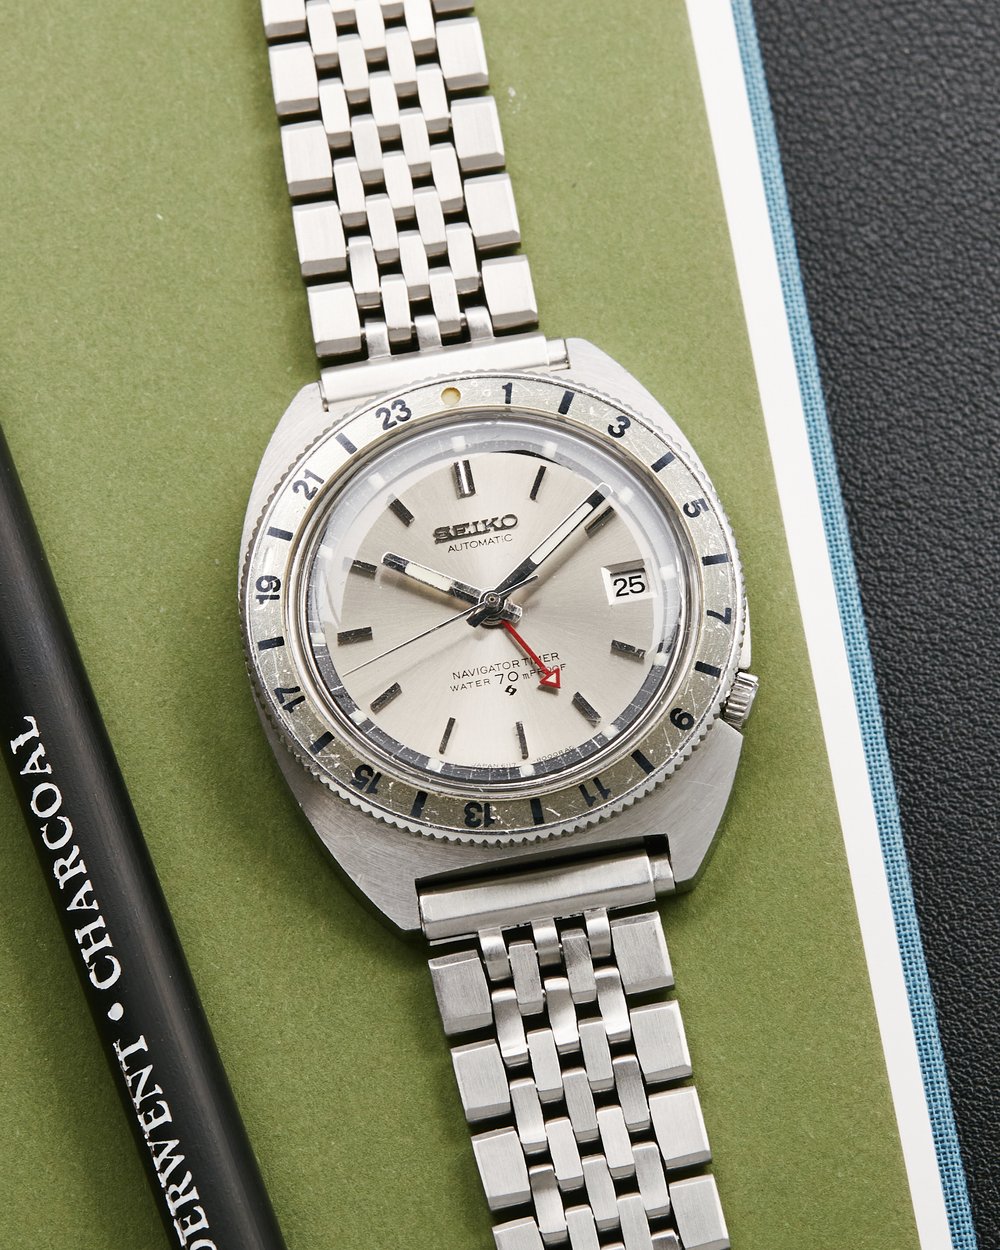 Seiko Navigator Timer GMT ref. 6117-8000 — Those Watch